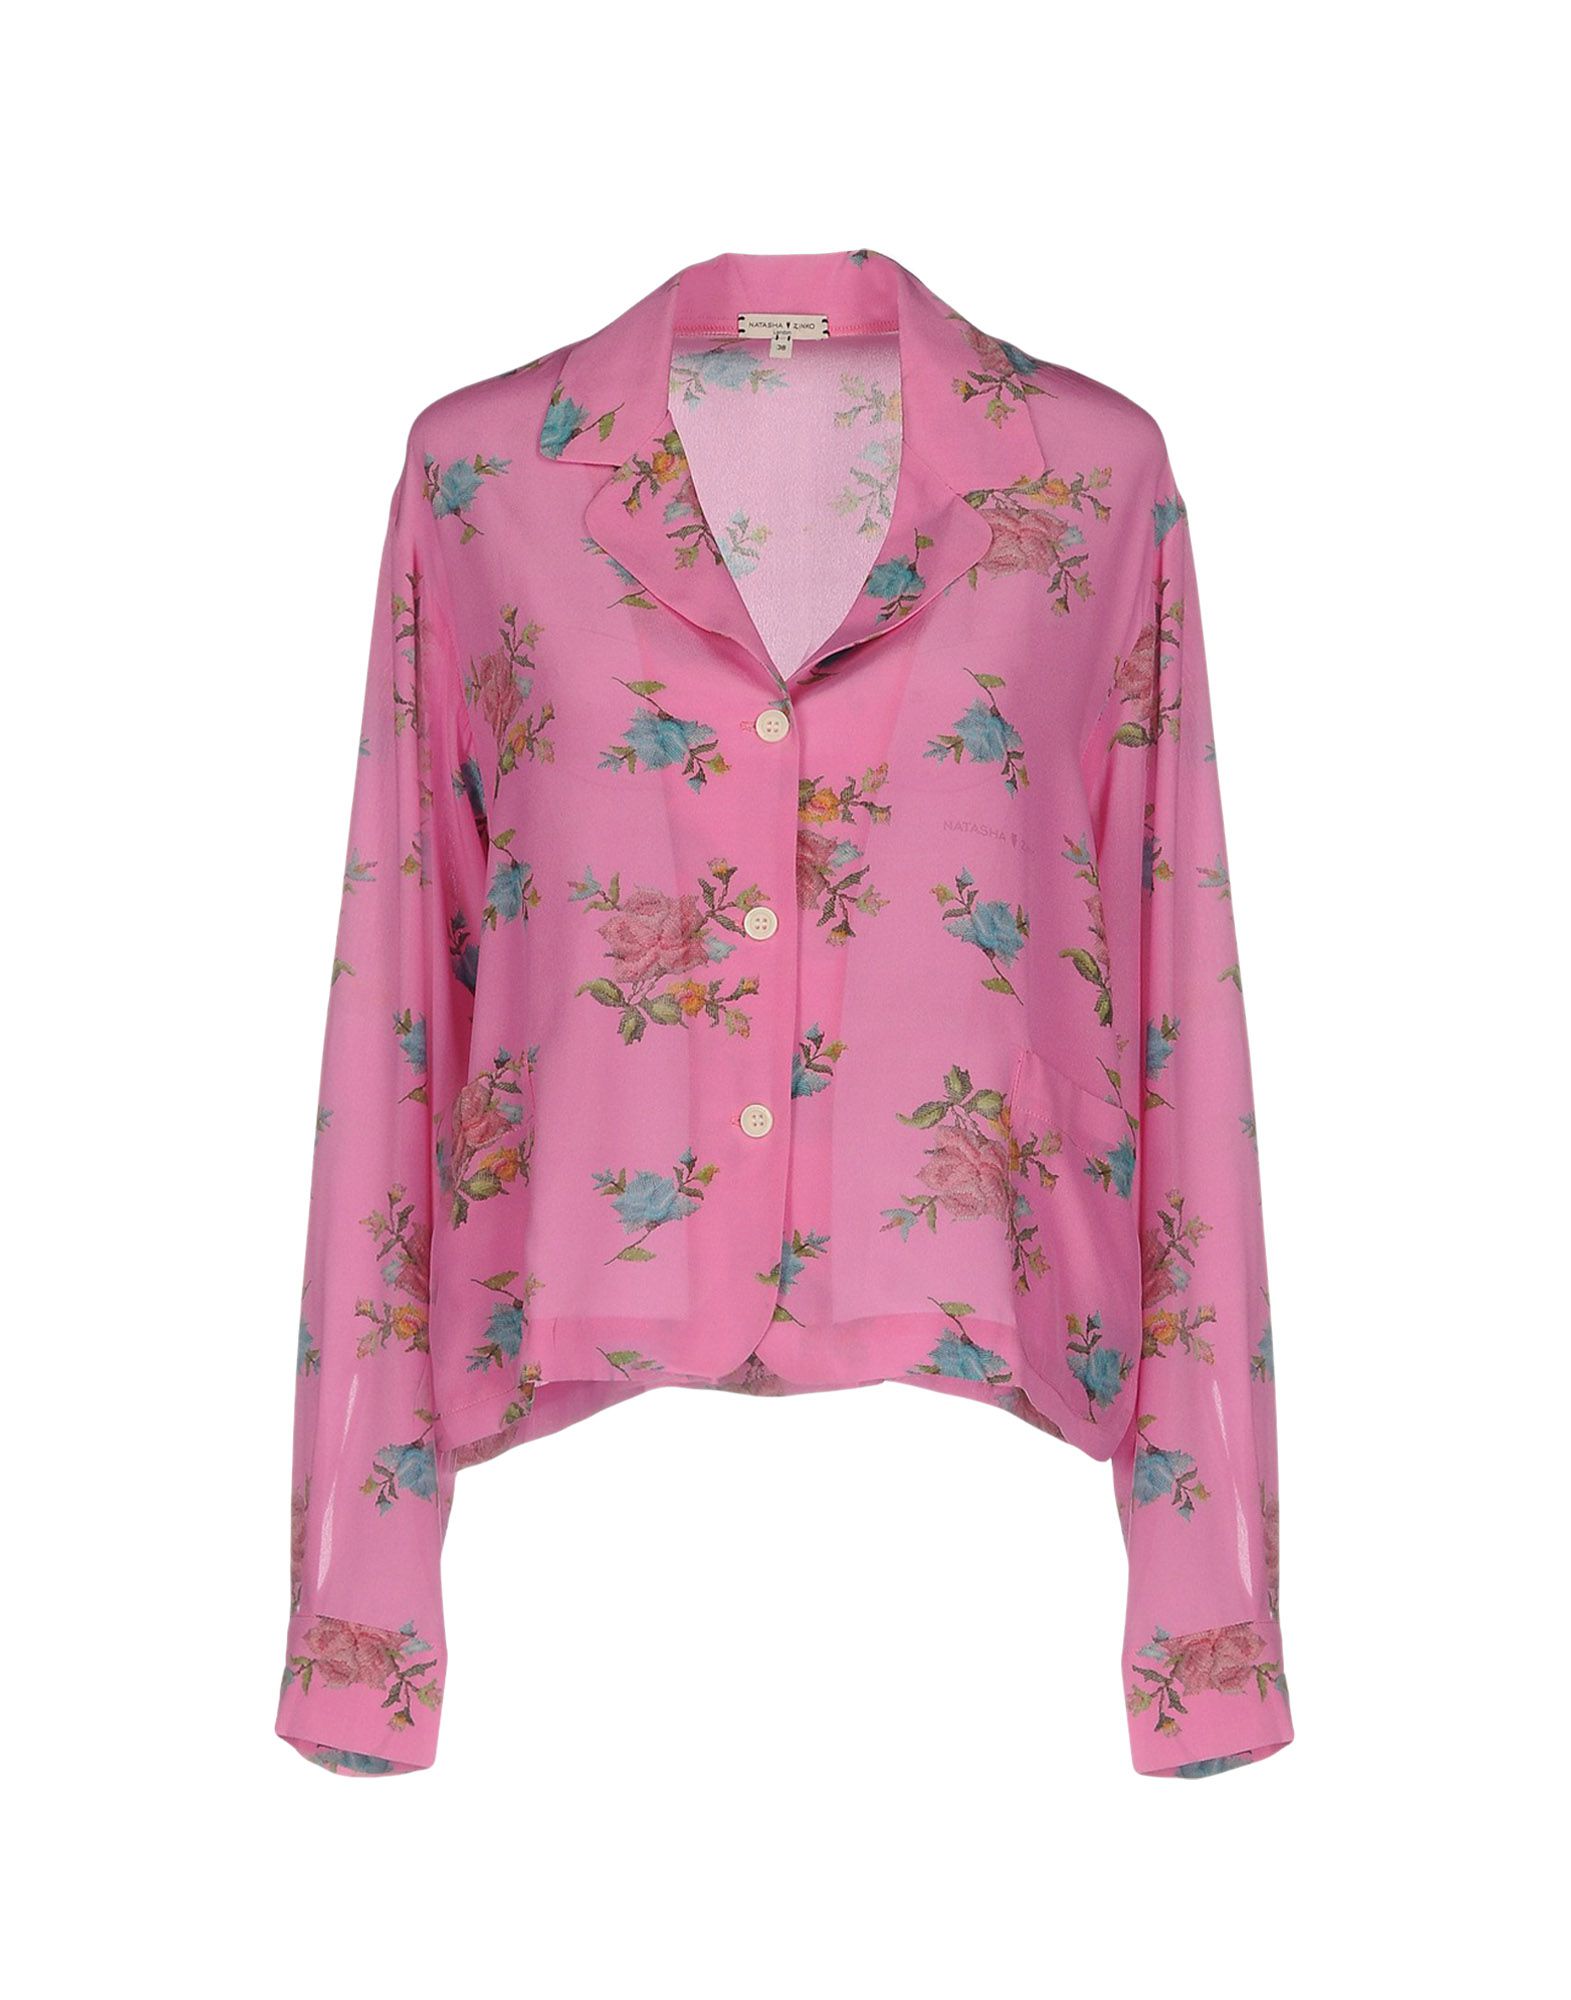 NATASHA ZINKO Floral shirts & blouses,38706375NA 5